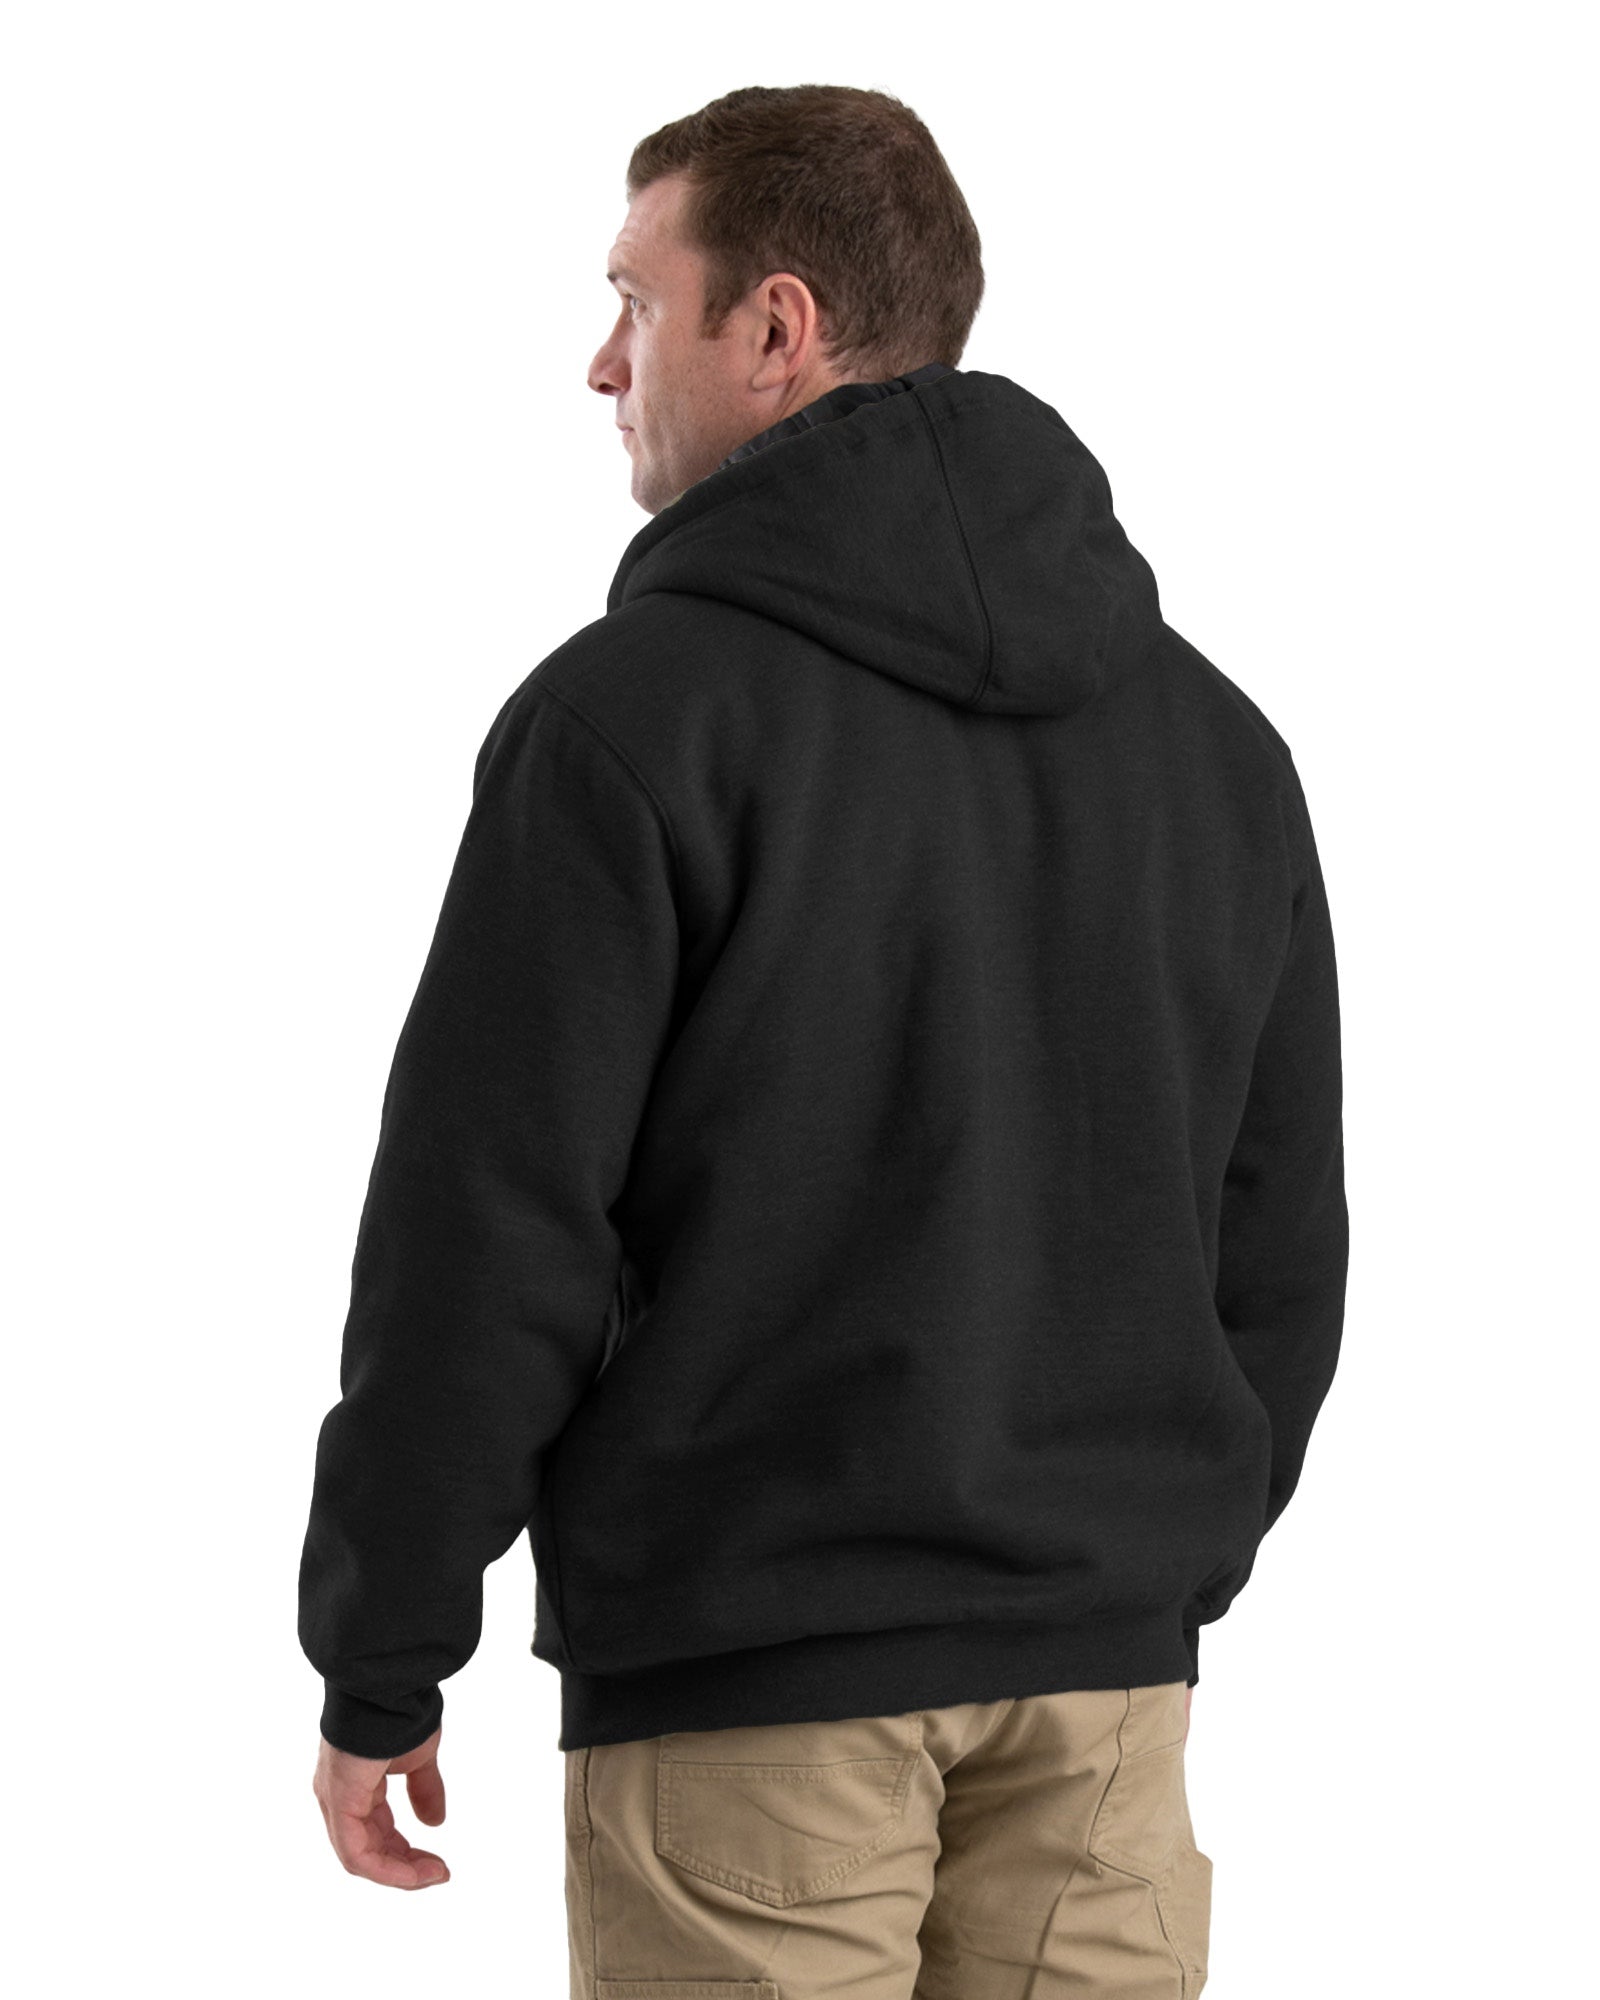 Highland Insulated Full-Zip Hooded Sweatshirt